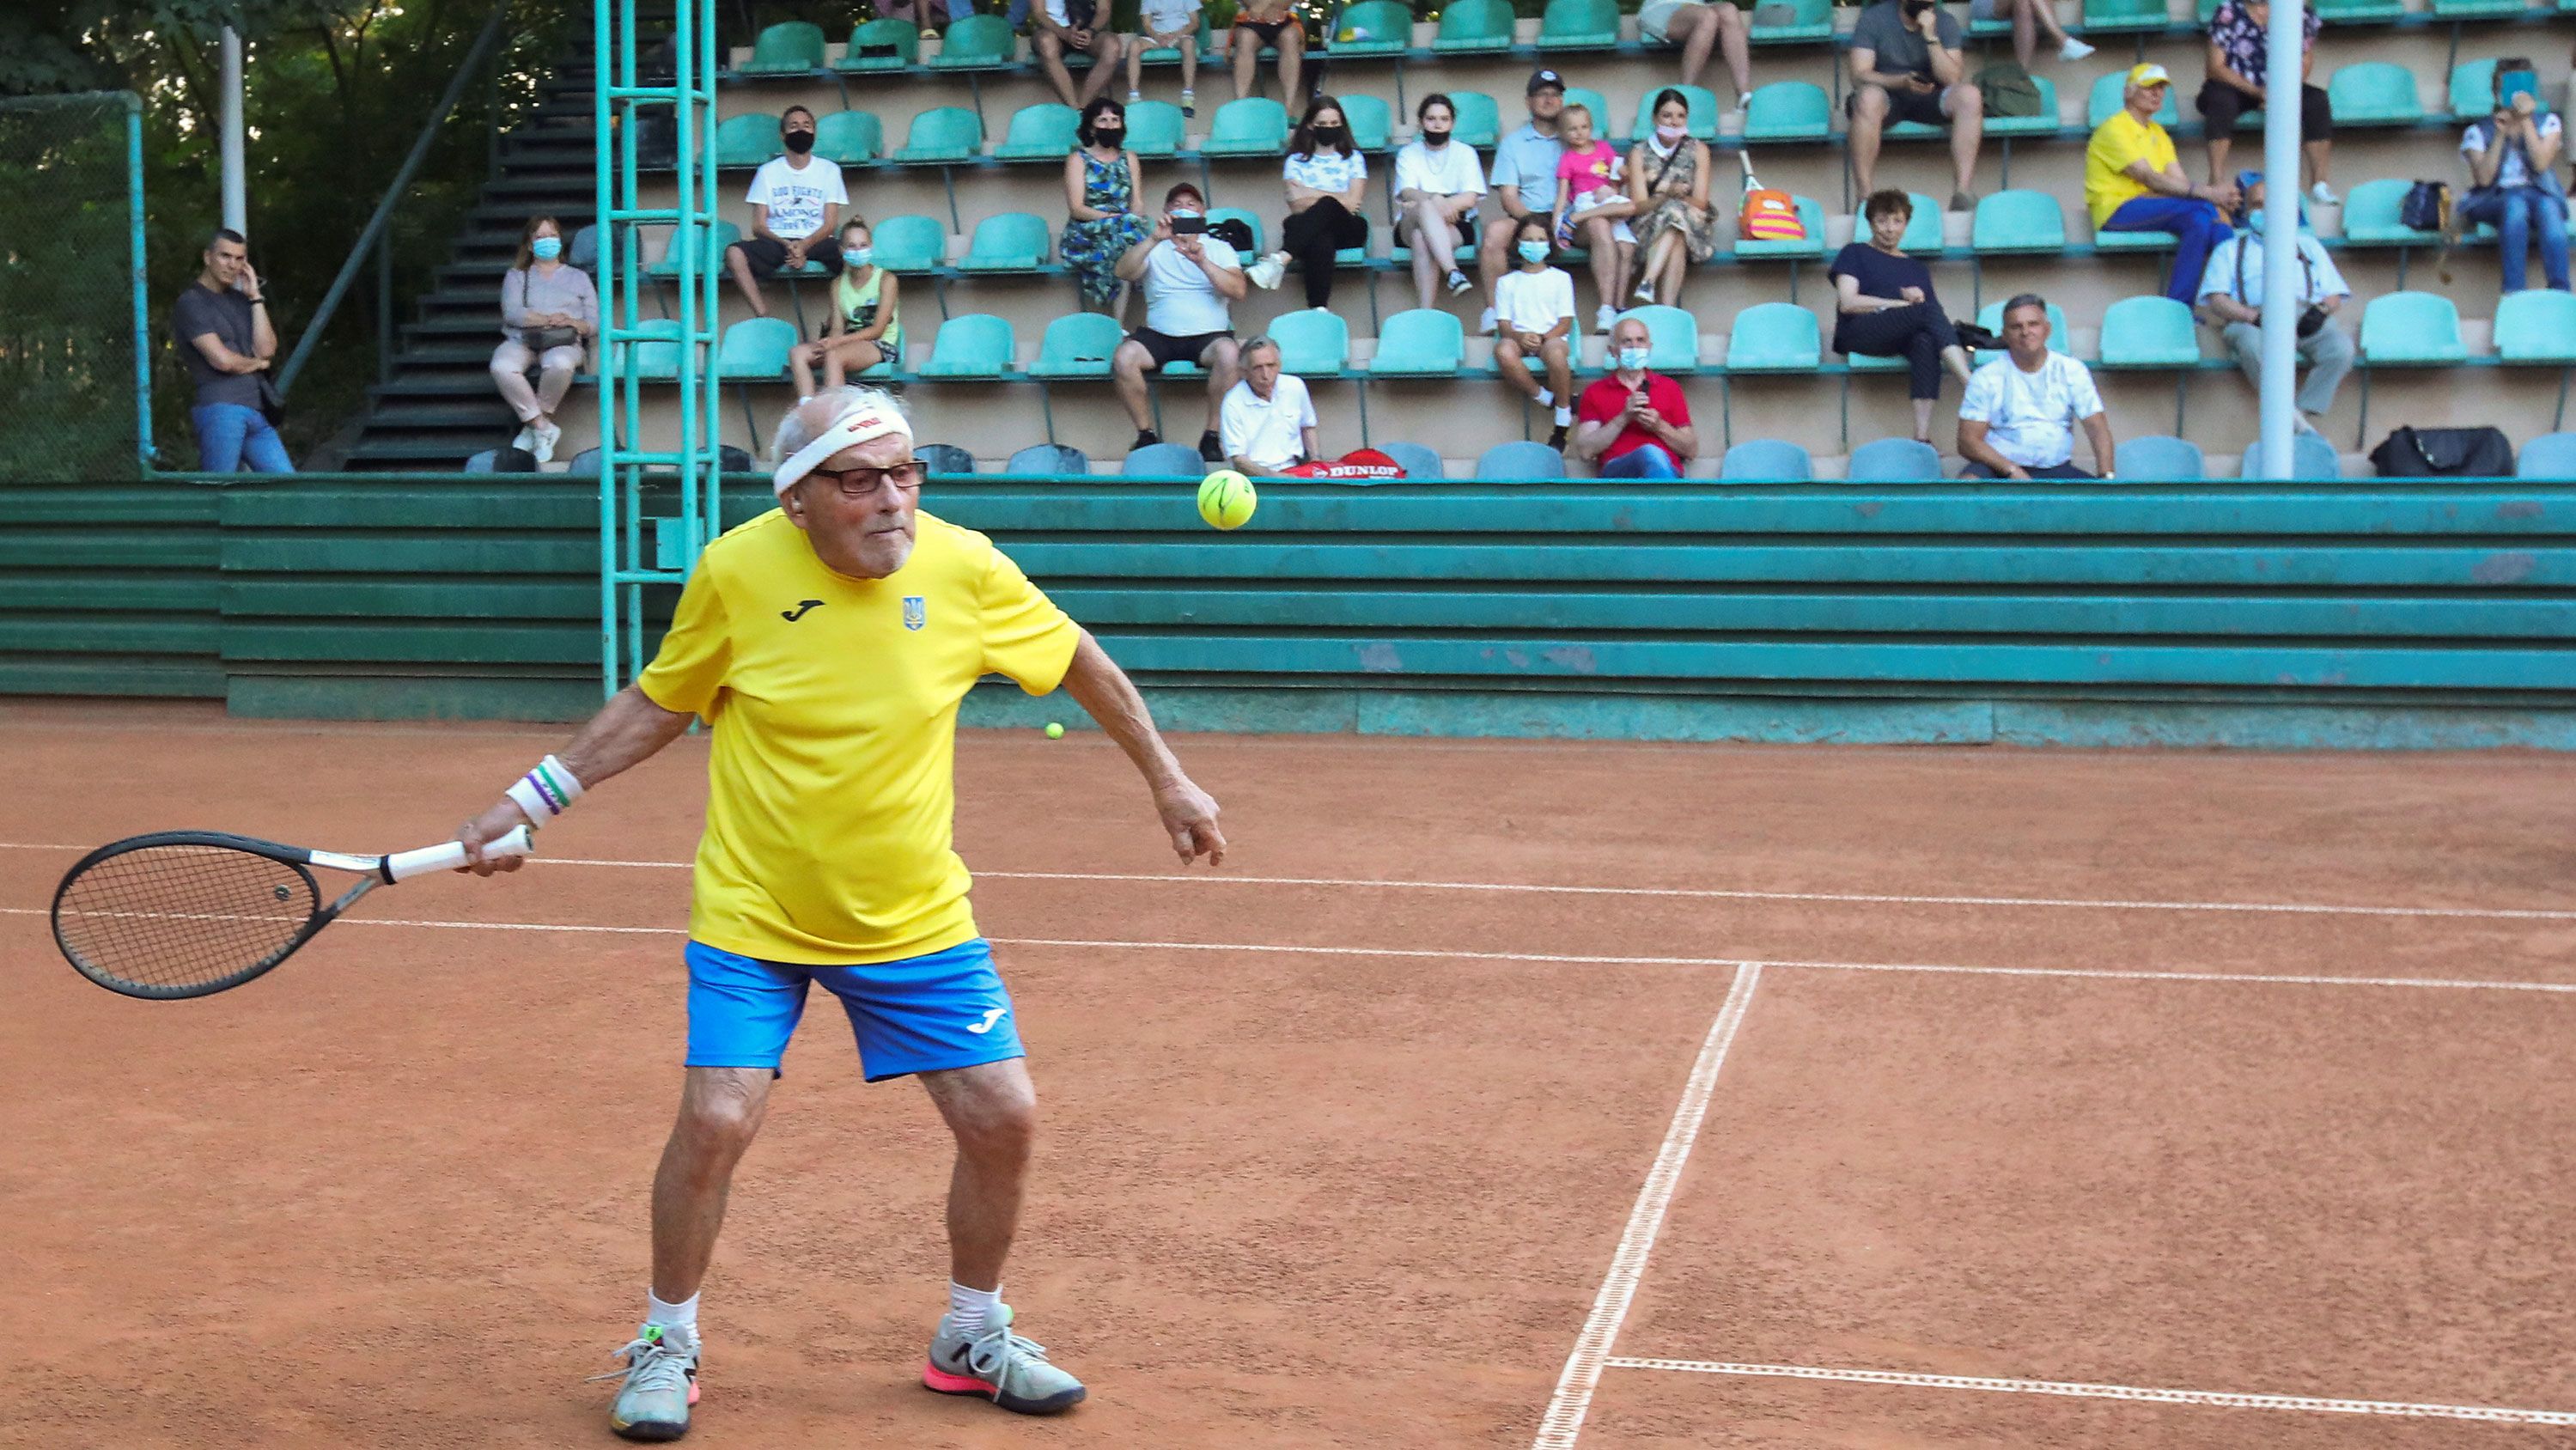 The world's oldest tennis player Ukrainian Leonid Stanislavskyi, 97, practices on court in Kharkiv, Ukraine July 7, 2021.